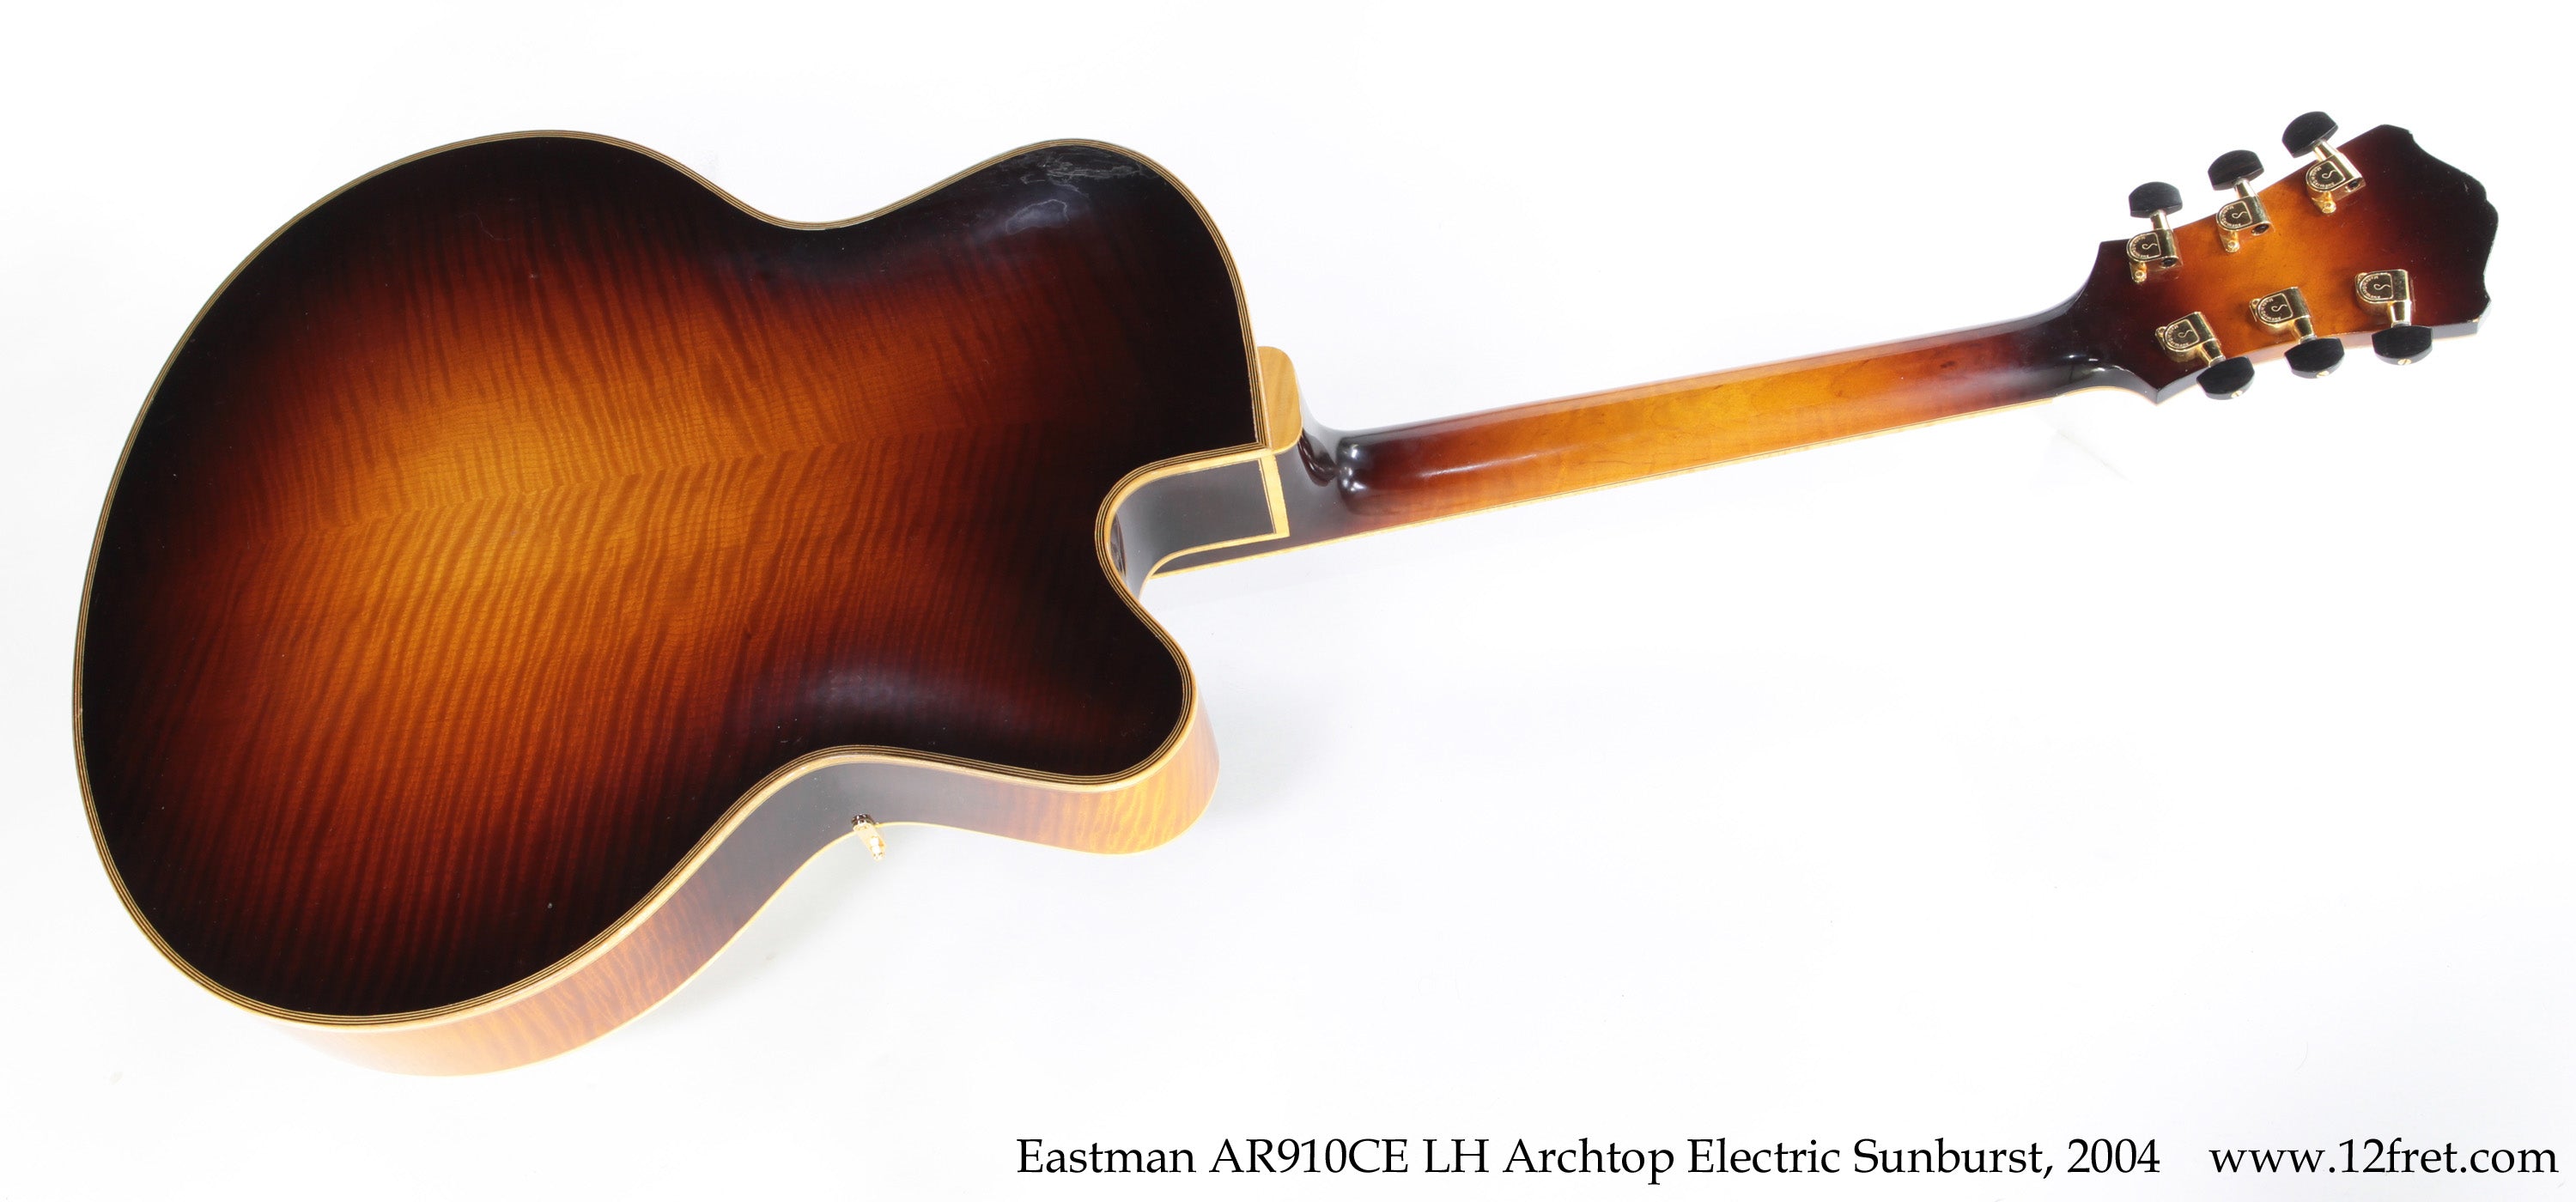 Eastman AR910CE LH Archtop Electric Sunburst, 2004 - The Twelfth Fret